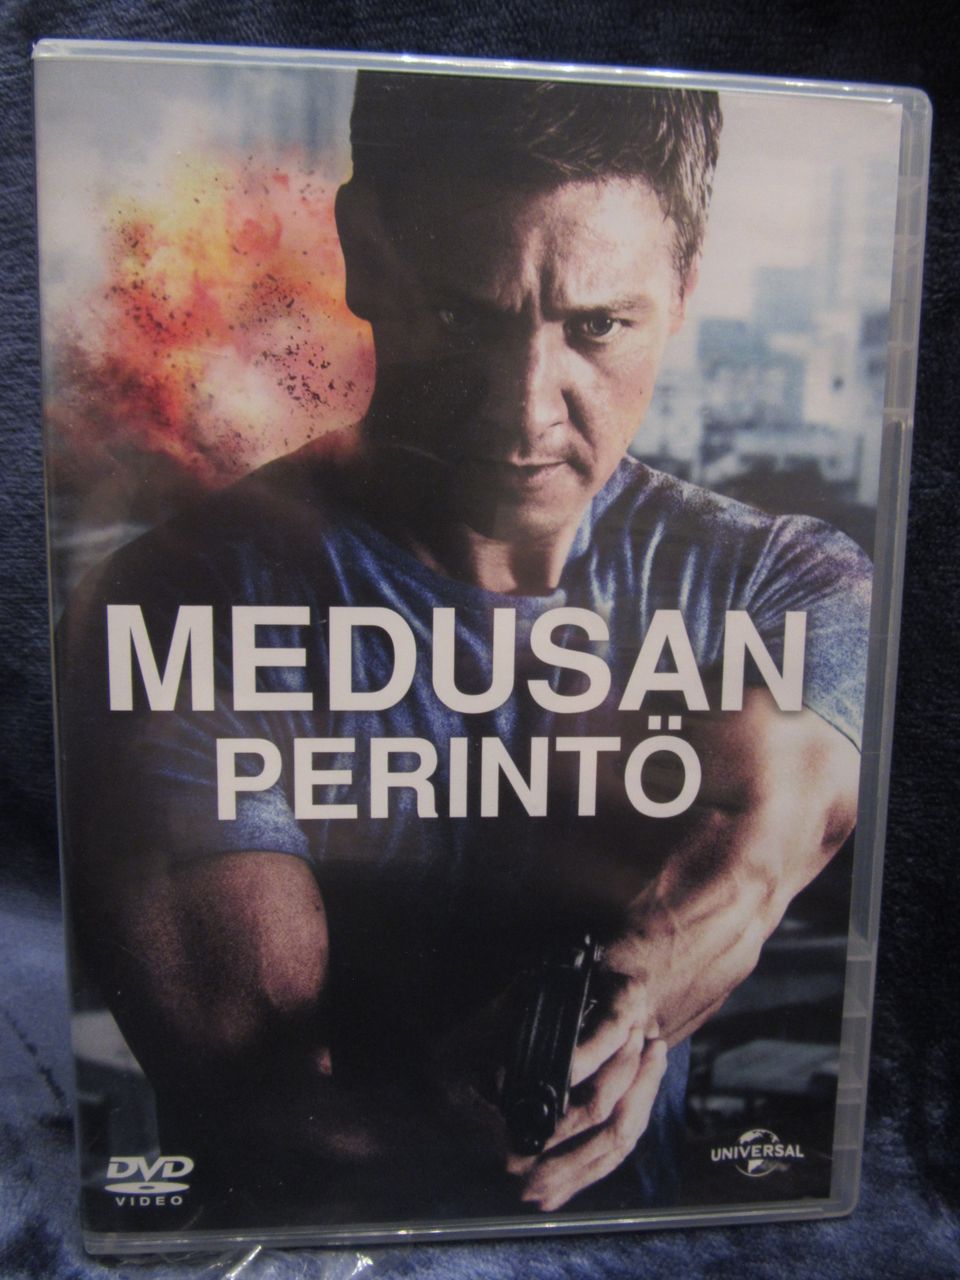 Medusan perintö dvd